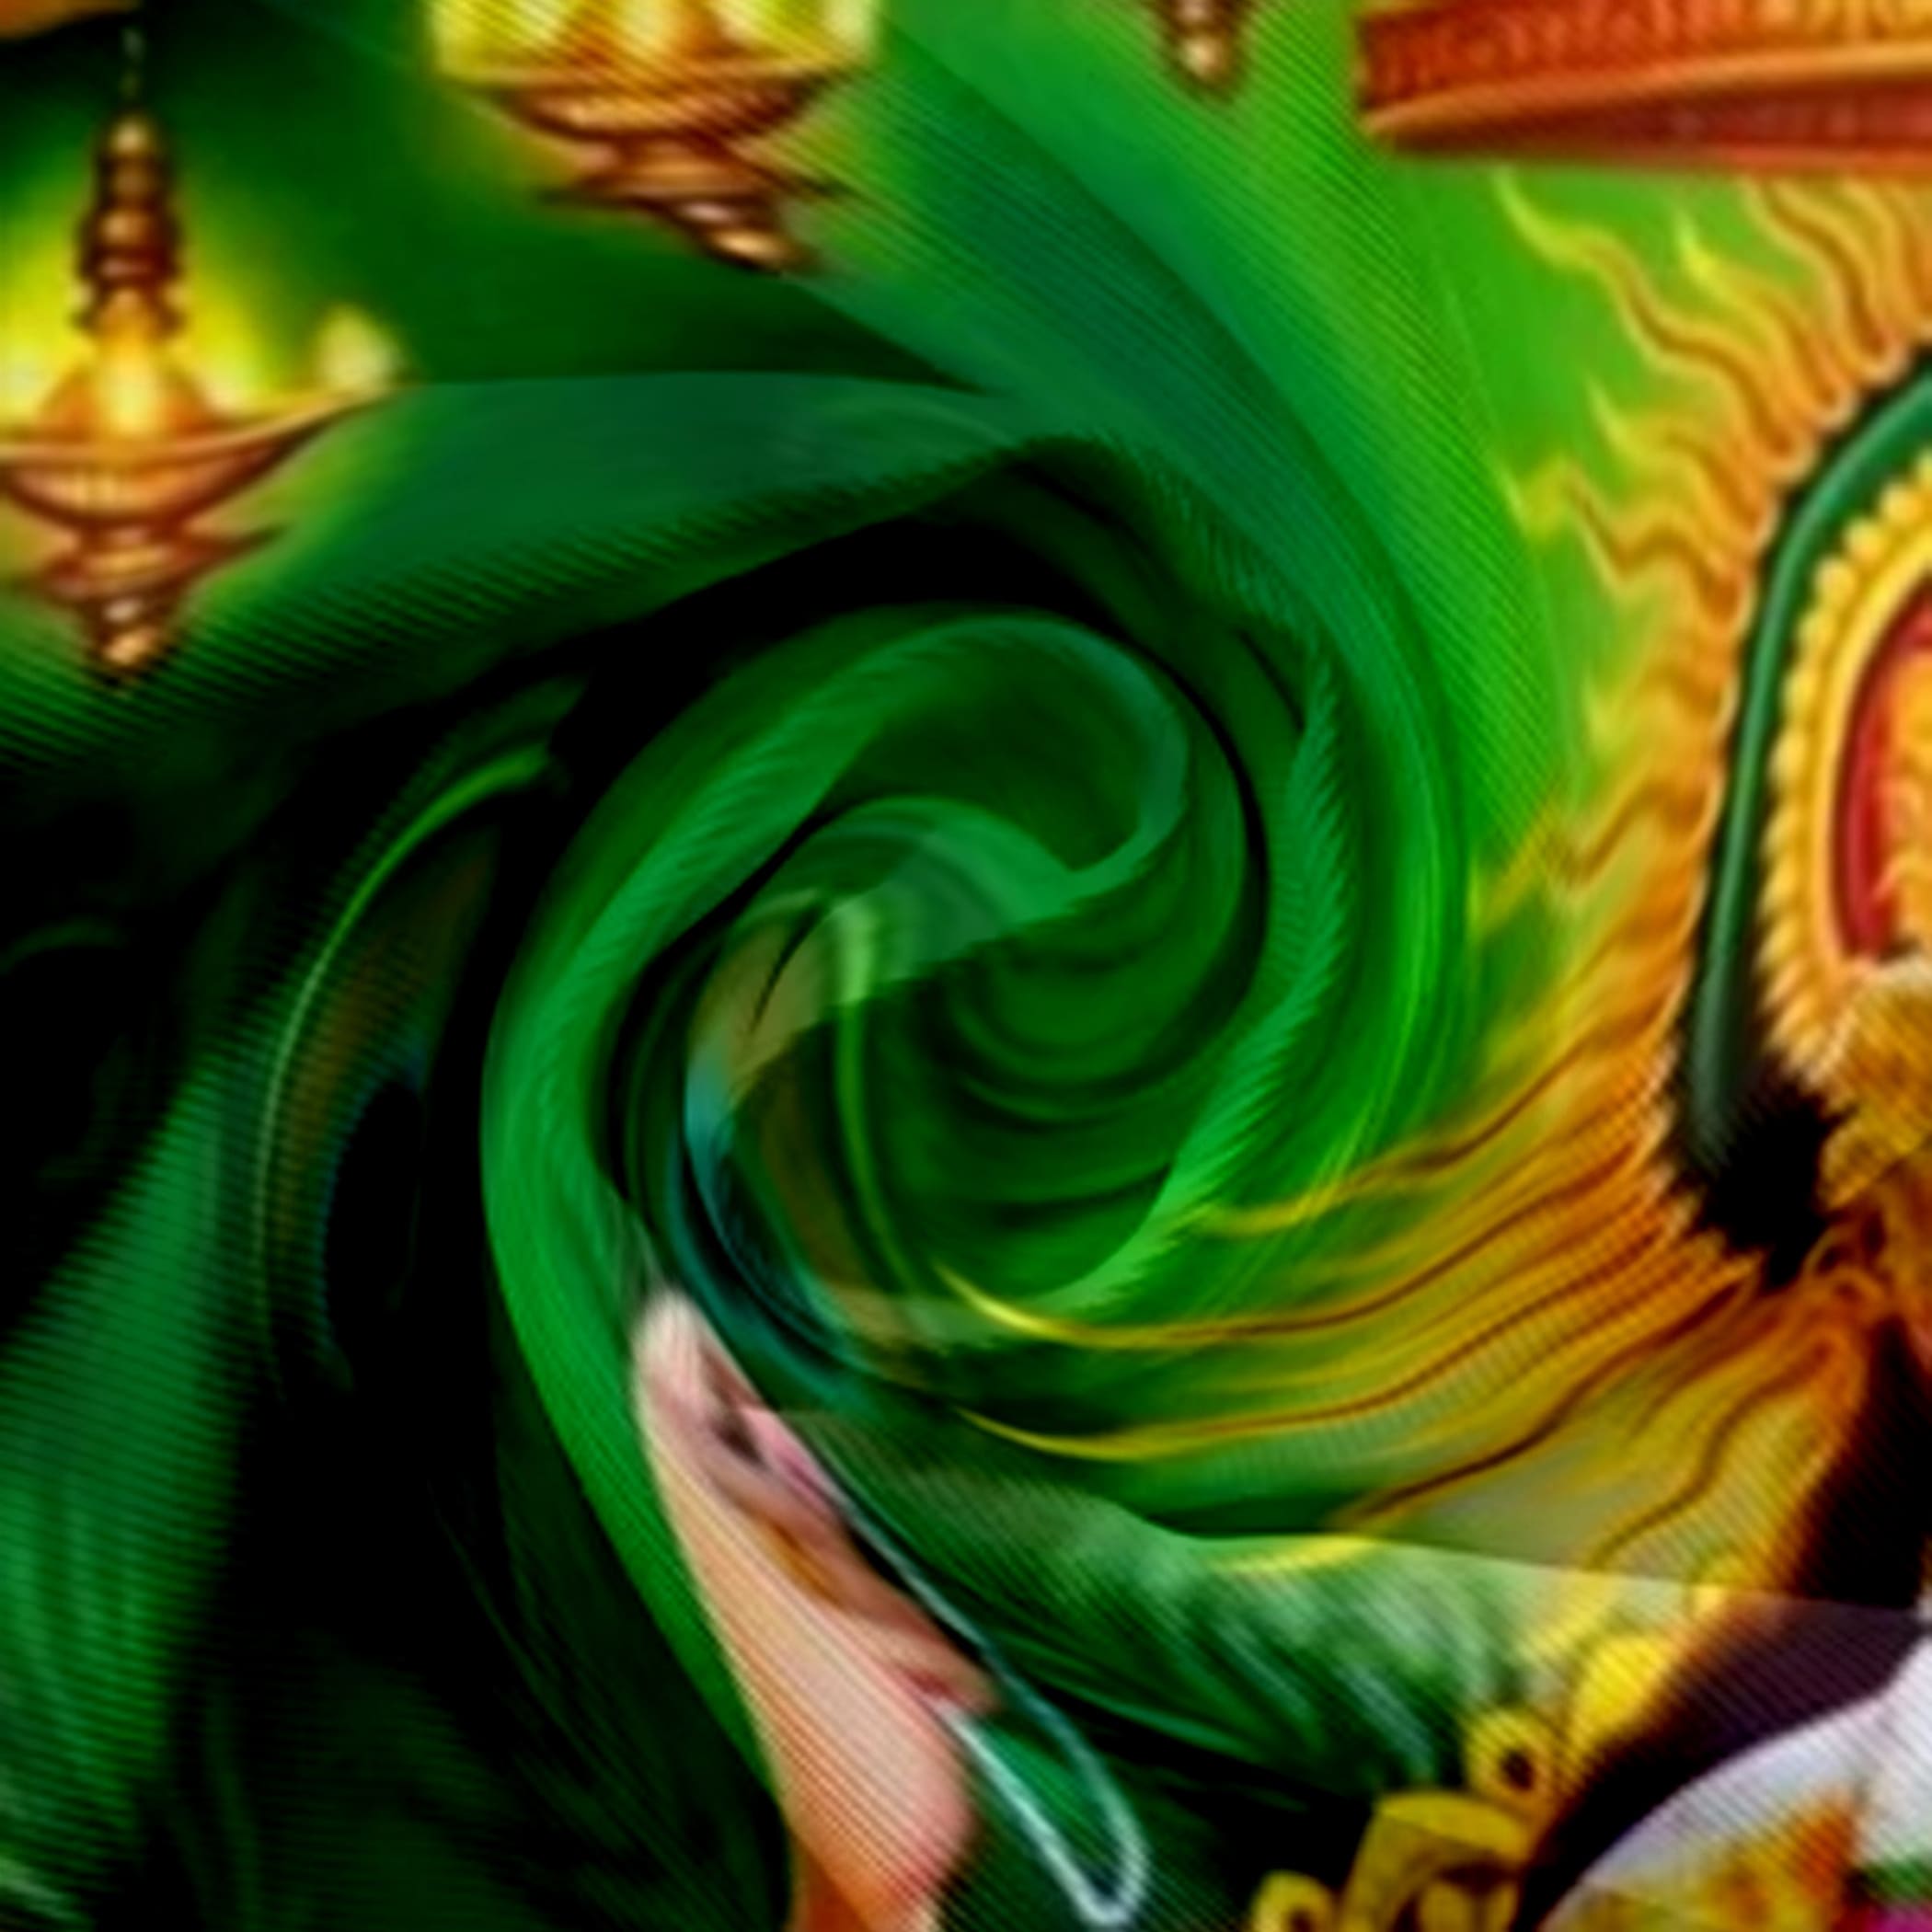 Hindu goddess god saraswati backdrop poster 5x8 diwali